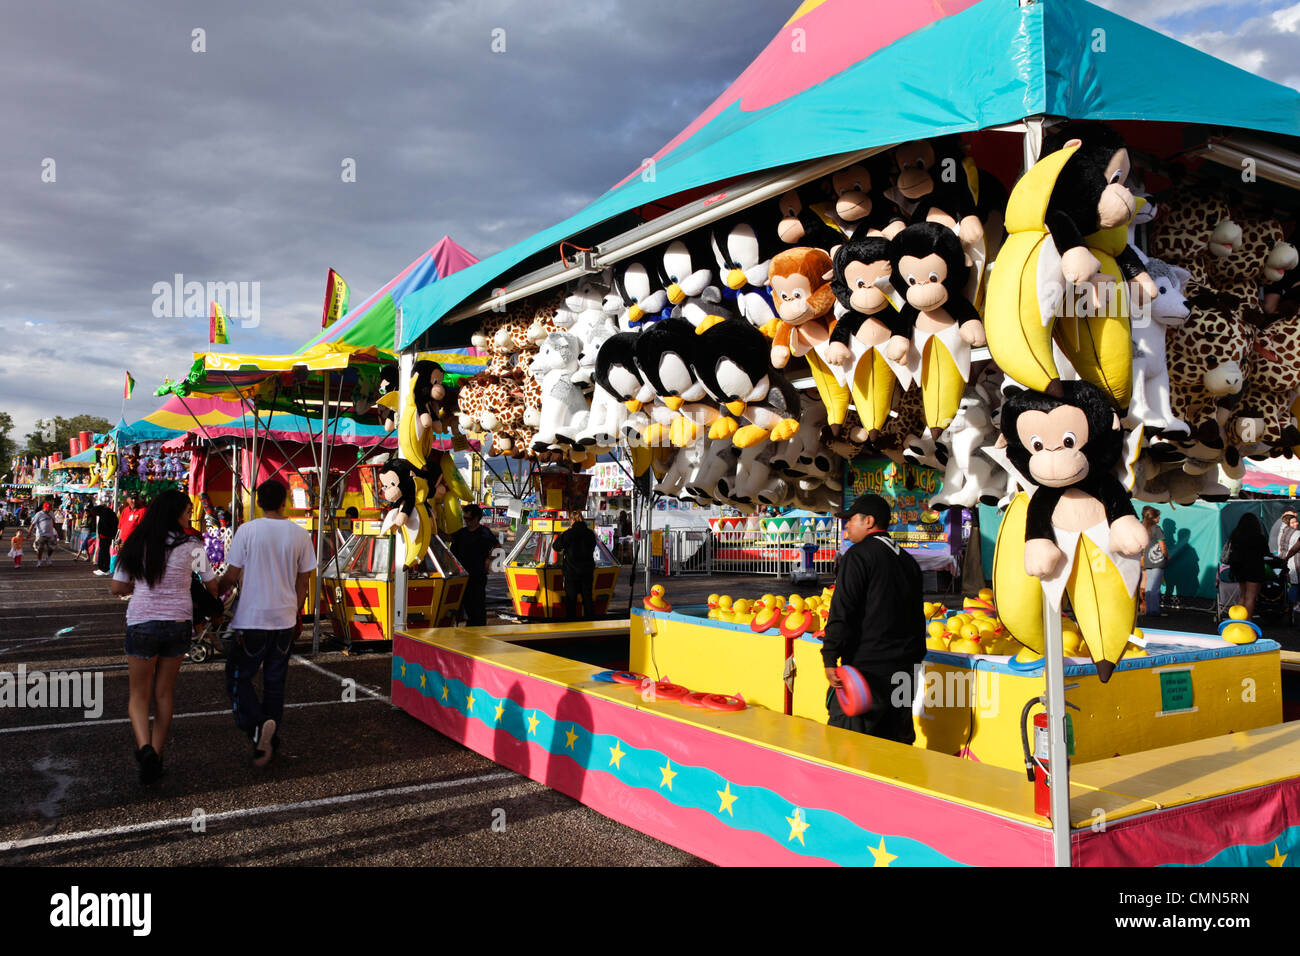 Albuquerque, New Mexico, United States. State Fair Stock Photo Alamy